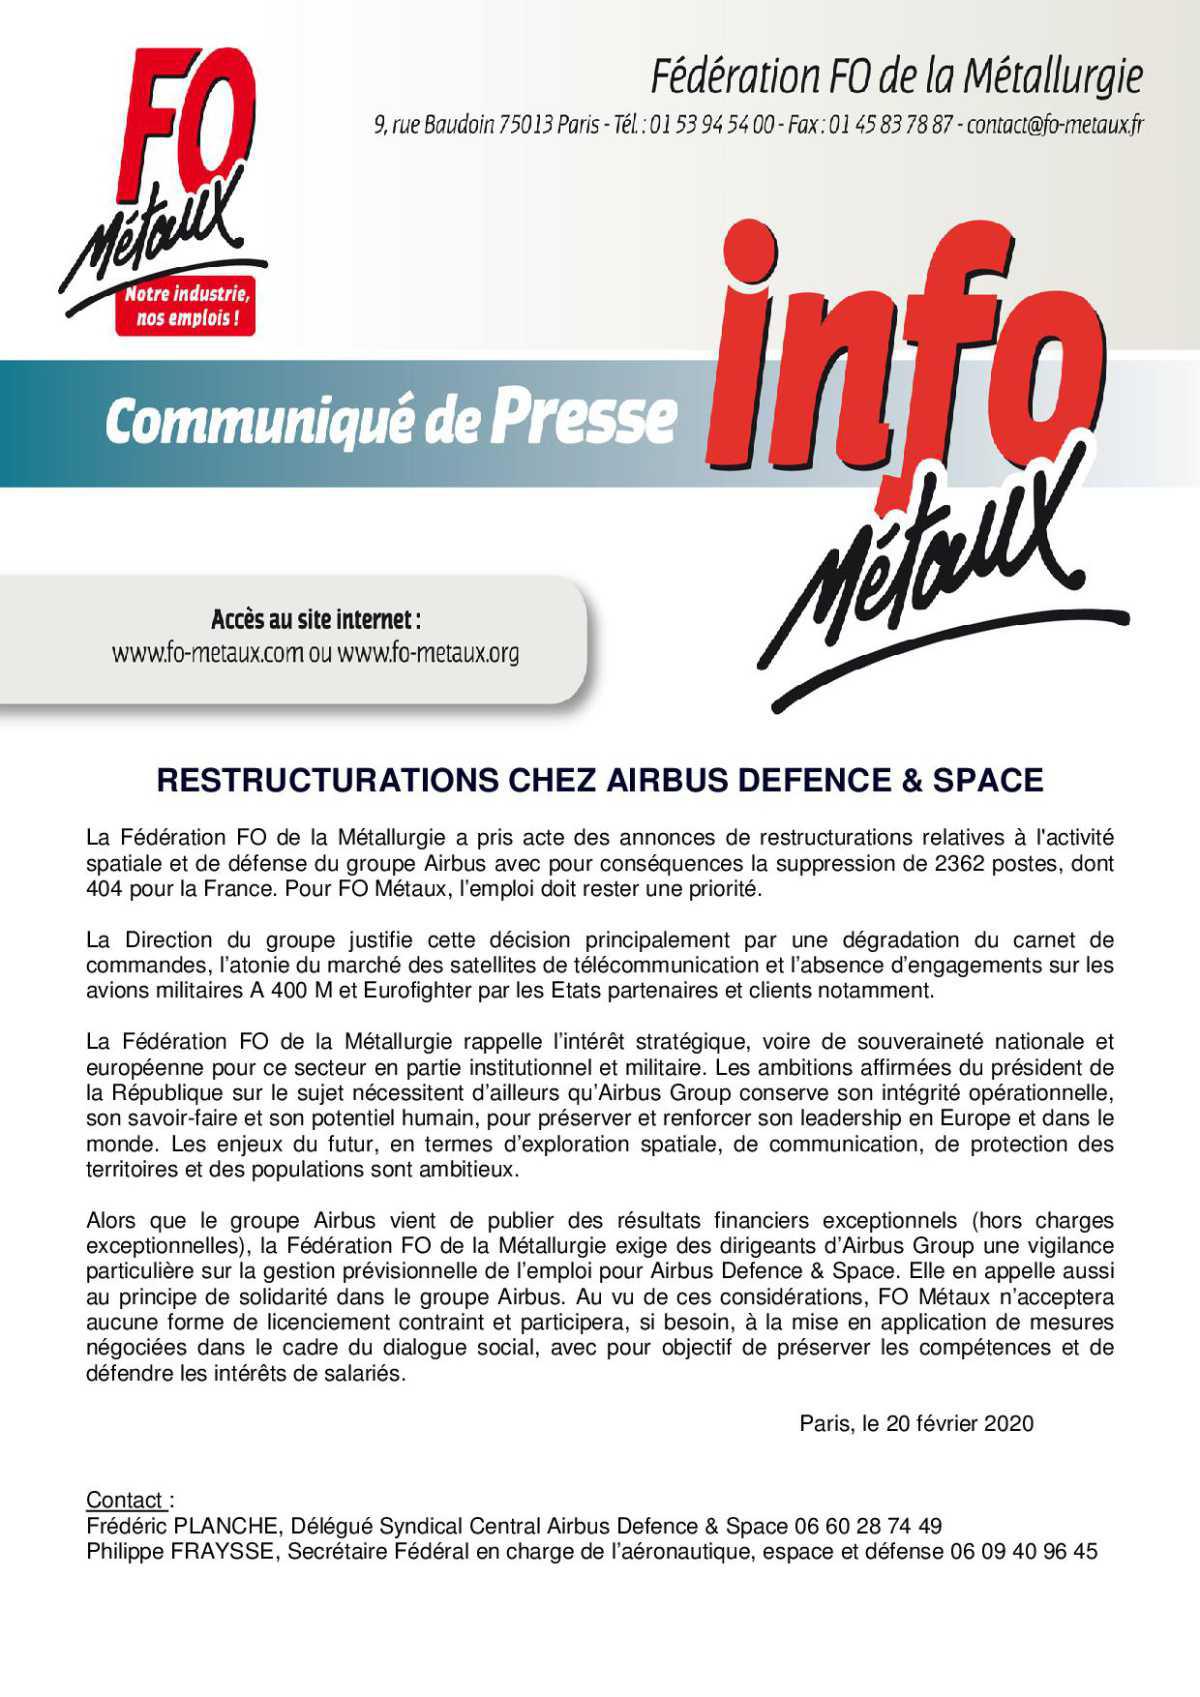 FO METAUX COMMUNIQUE DE PRESSE AIRBUS GROUP 20.02.2020